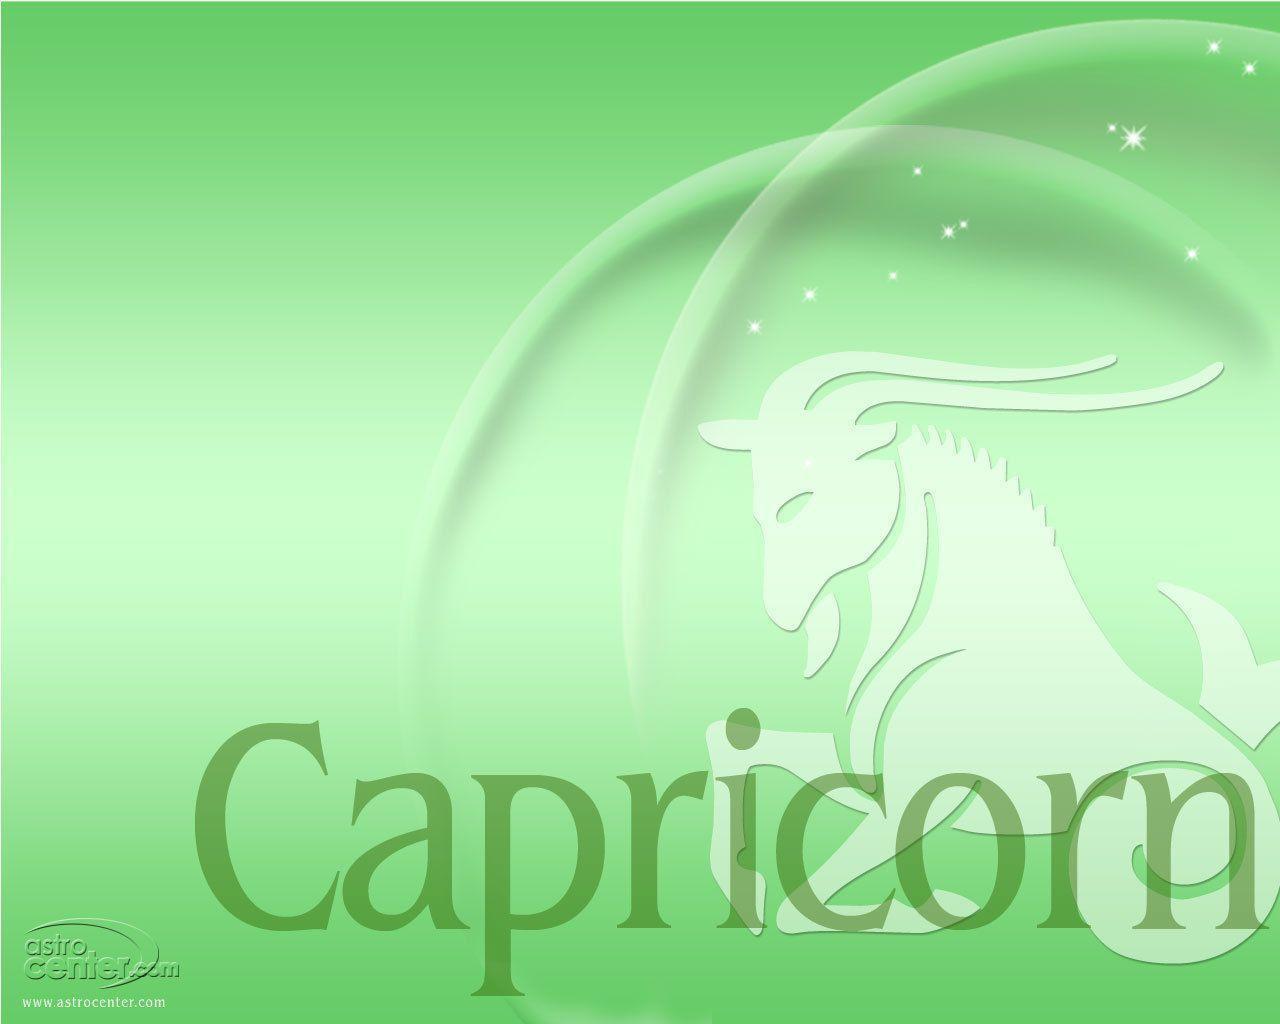 Capricorn Wallpapers Wallpaper Cave HD Wallpapers Download Free Images Wallpaper [wallpaper981.blogspot.com]